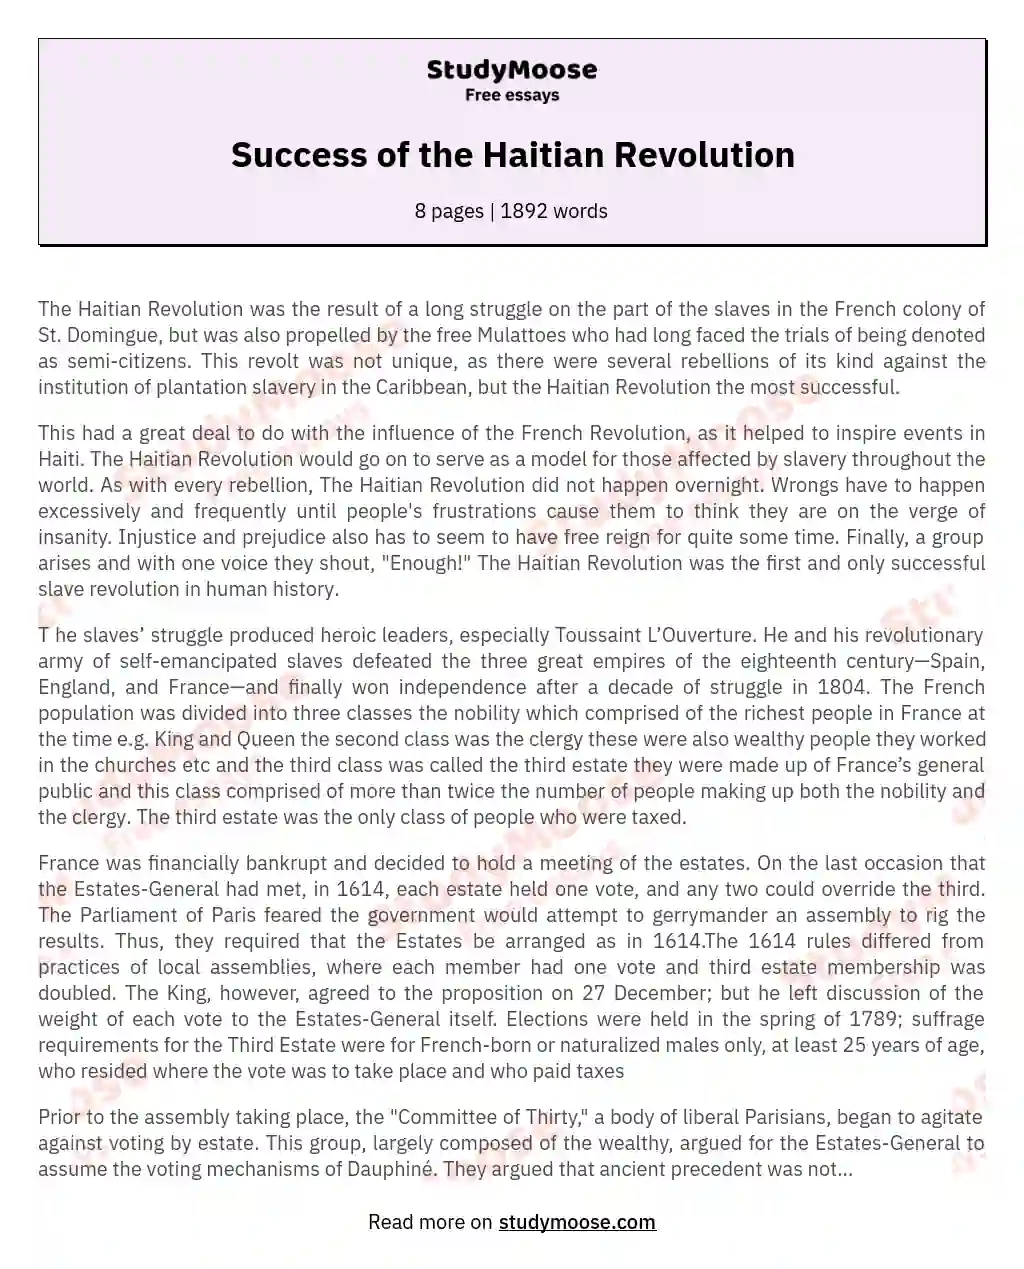 Success of the Haitian Revolution essay